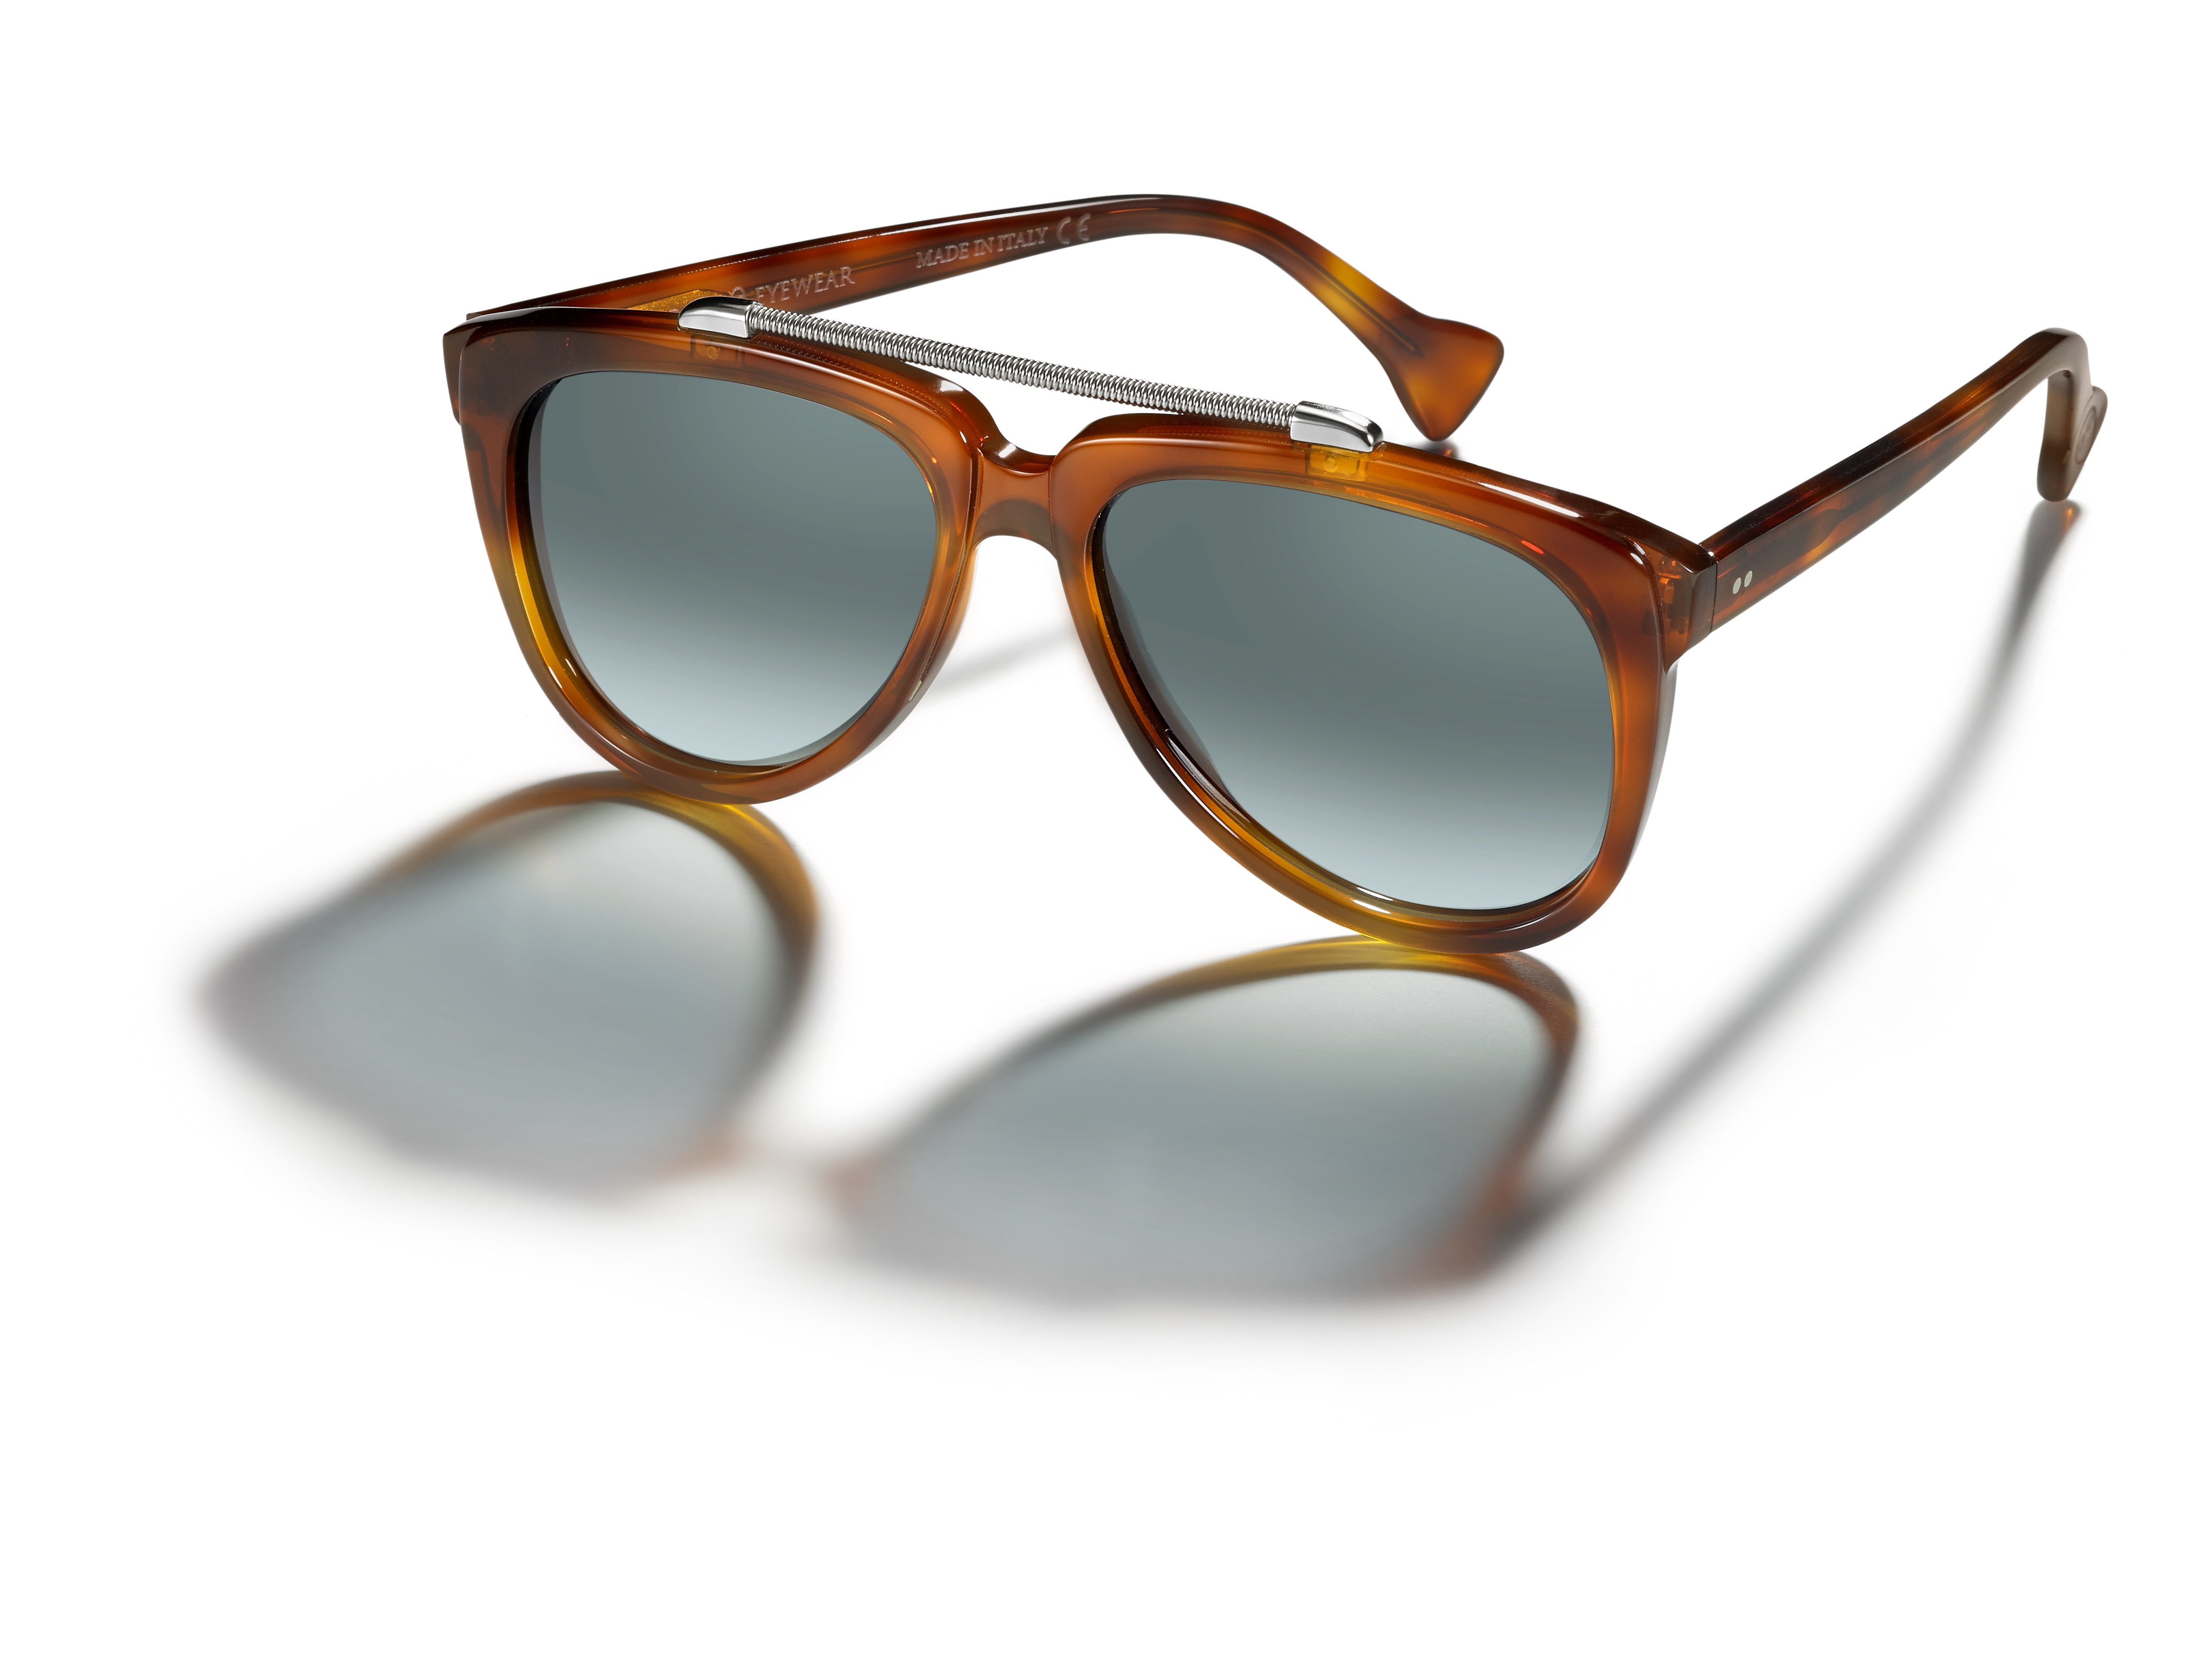 Pitti Uomo Gennaio 2016 Firenze: sei nuovi modelli di occhiali per Saturnino Eyewear